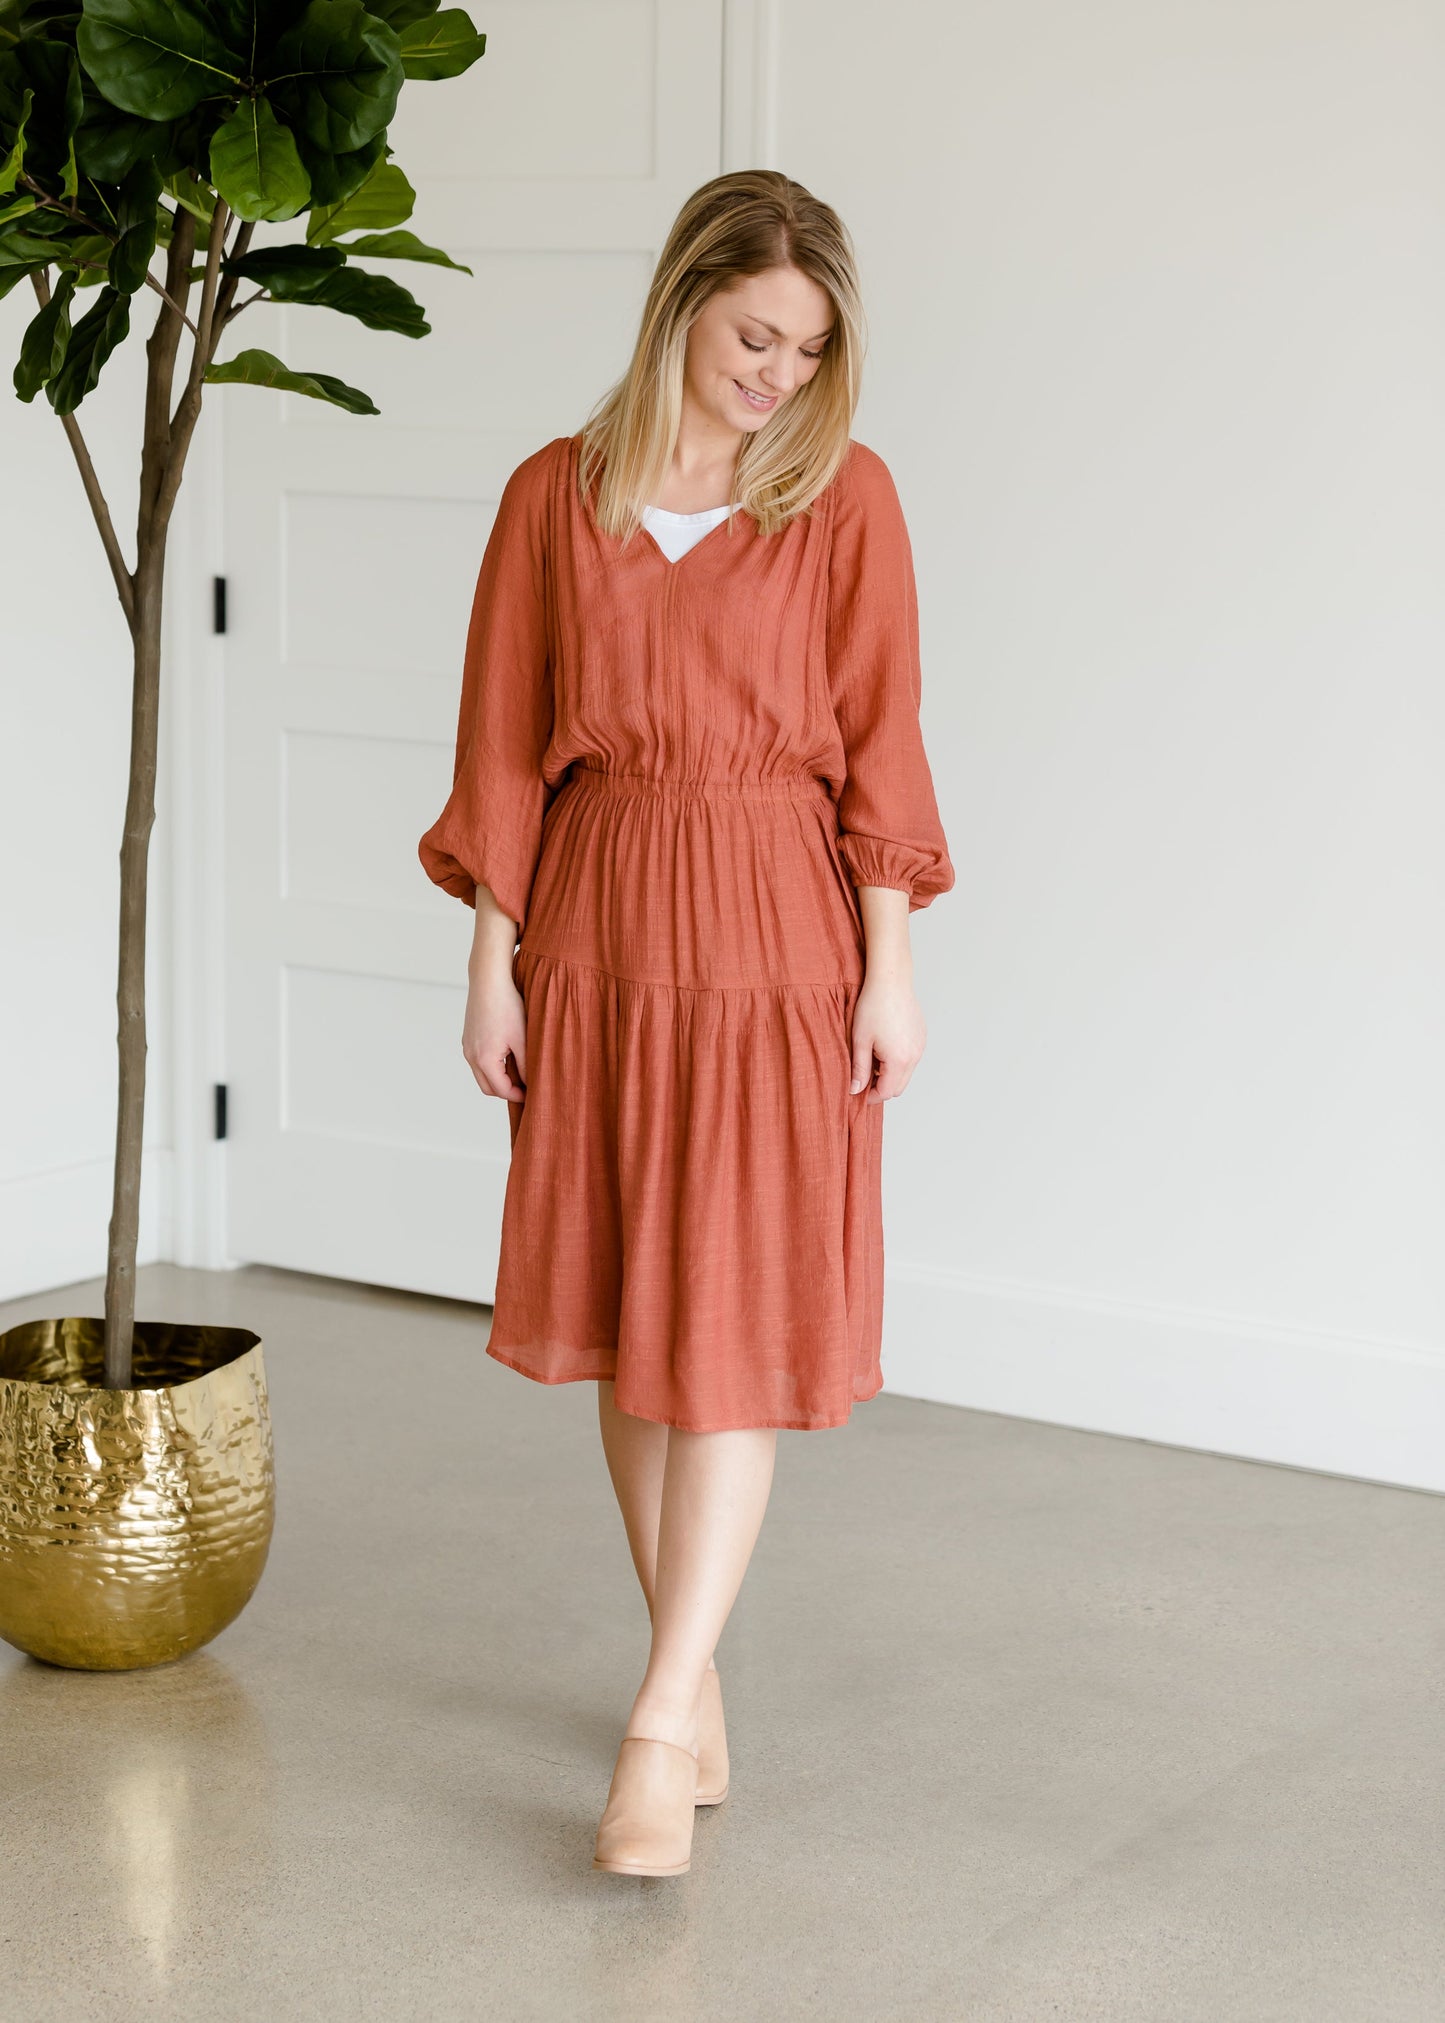 Tiered Luster 3/4 Sleeve Midi Dress - FINAL SALE Dresses